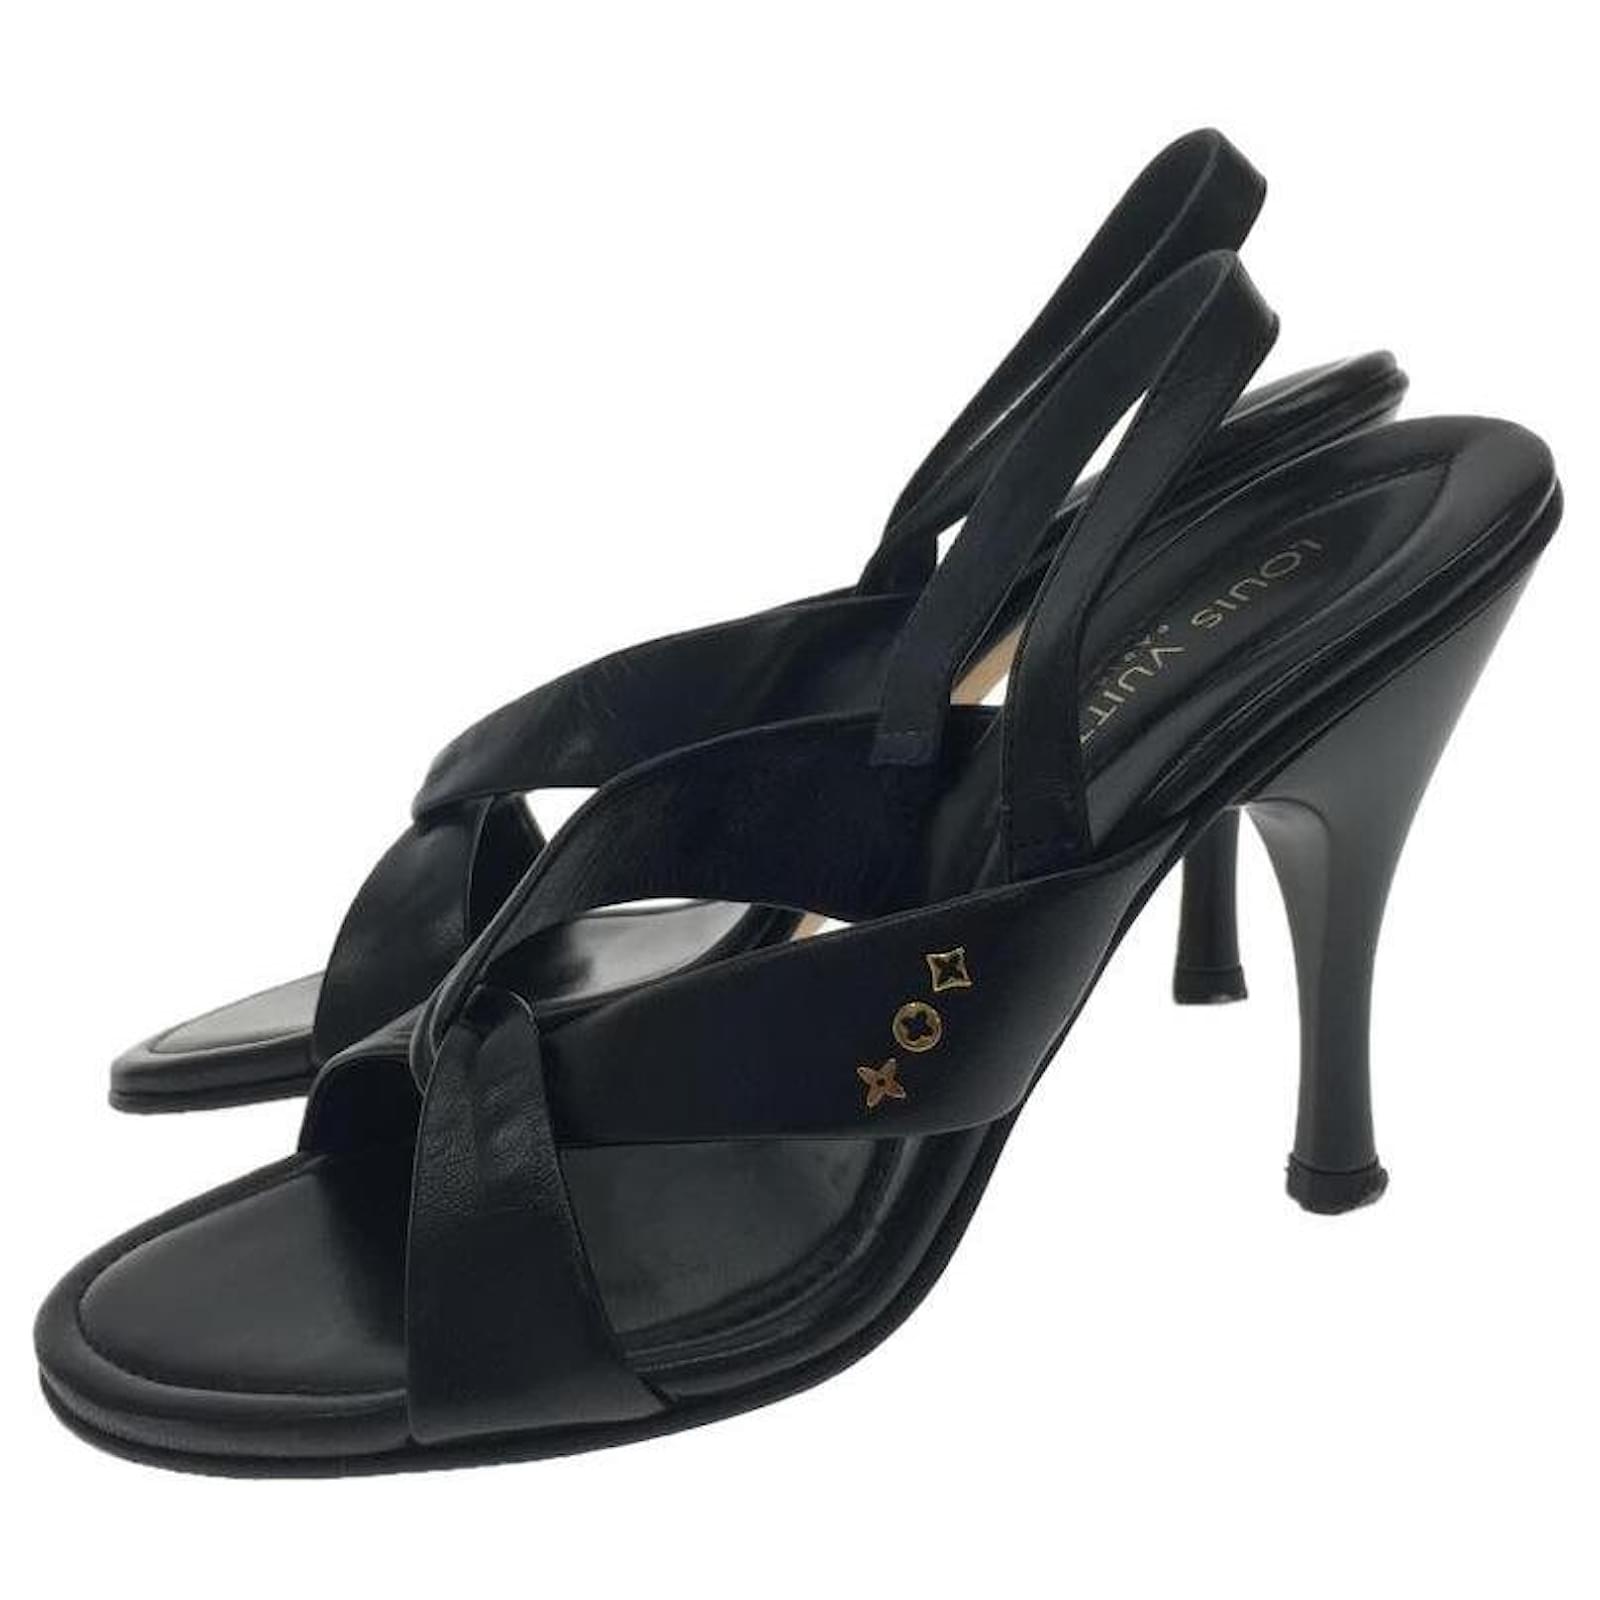 LOUIS VUITTON Sandals / 34.5 / Black / Leather / AR0102 / Heel